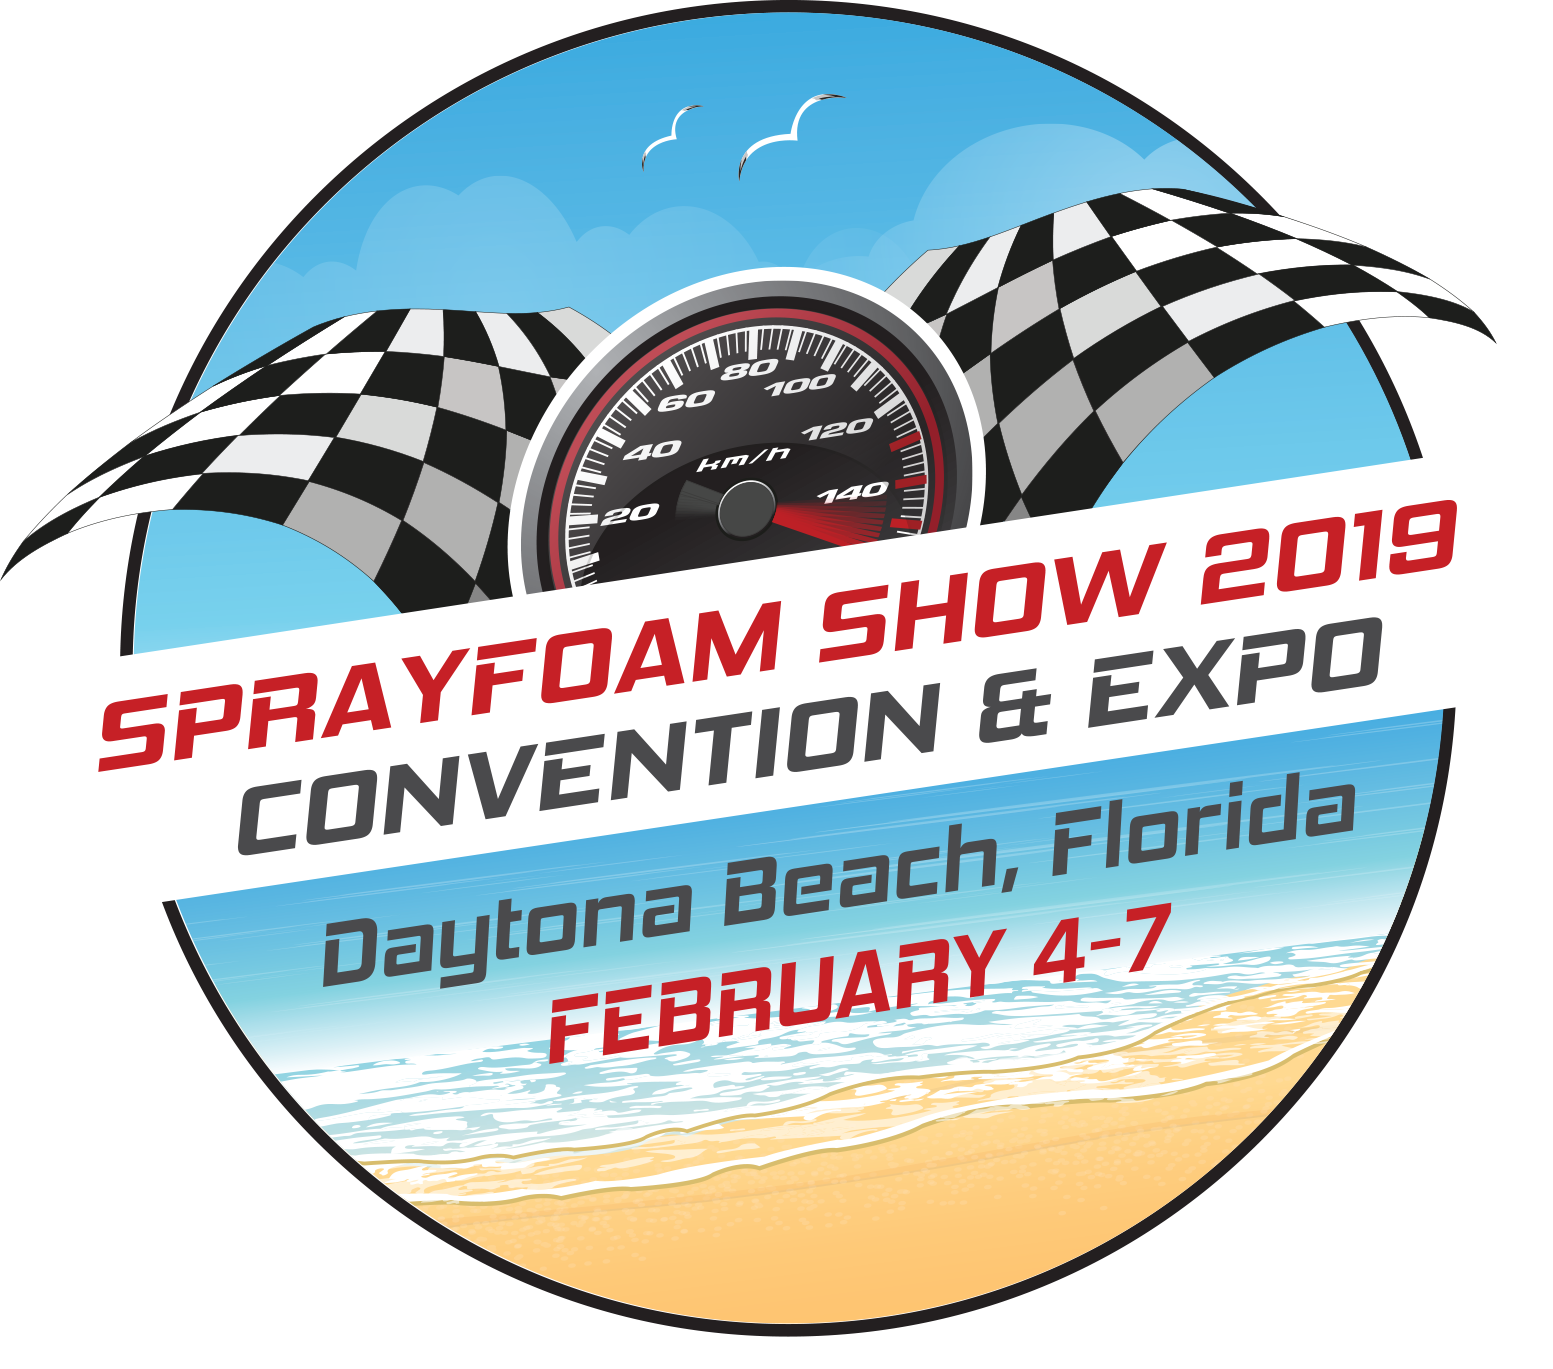 Sprayfoam 2019 Convention & Expo logo